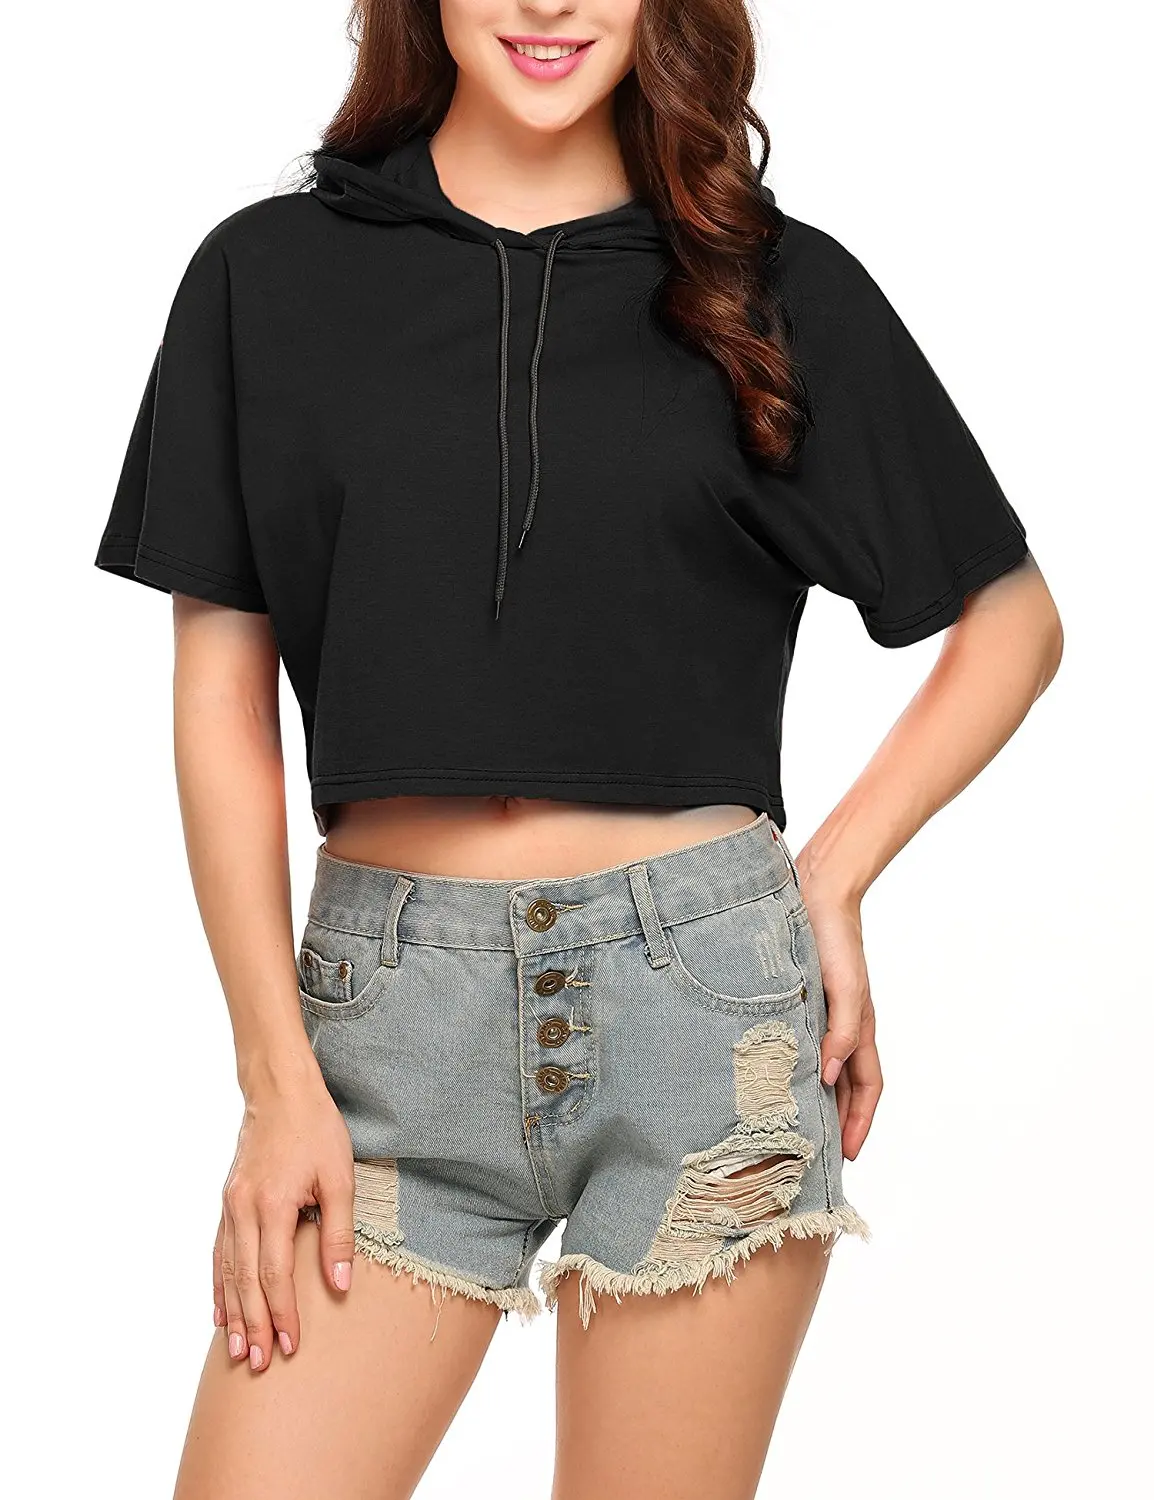 JANYN Women’s Hoodie Short Sleeve Sweatshirt Crop Top Pure Color Slim Shirt